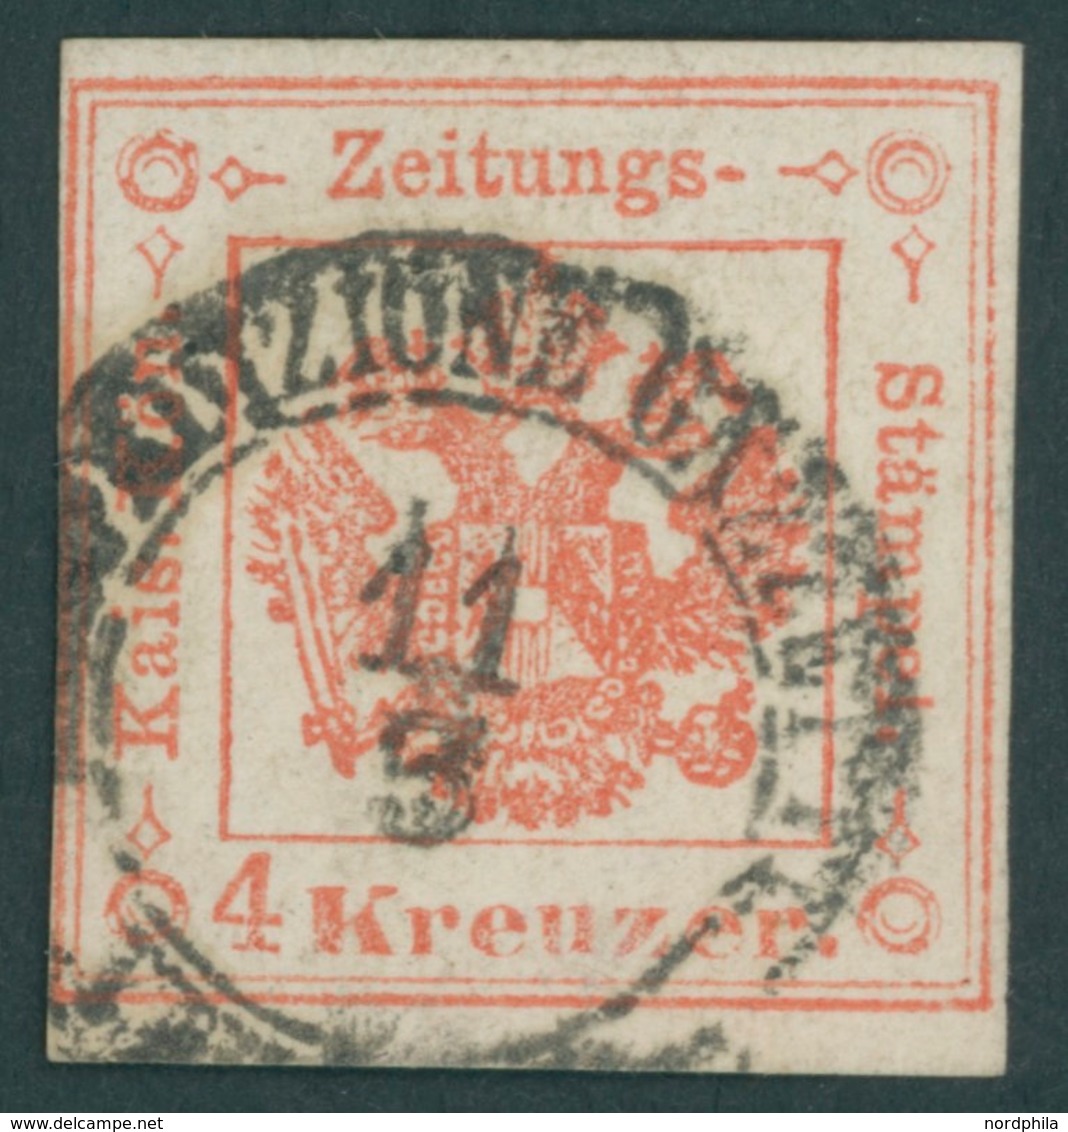 LOMBARDEI UND VENETIEN Z 3 O, Zeitungsstempelmarken: 1858, 4 Kr. Rot, Links Lupenrandig, Sonst Breitrandiges Farbfrische - Lombardy-Venetia